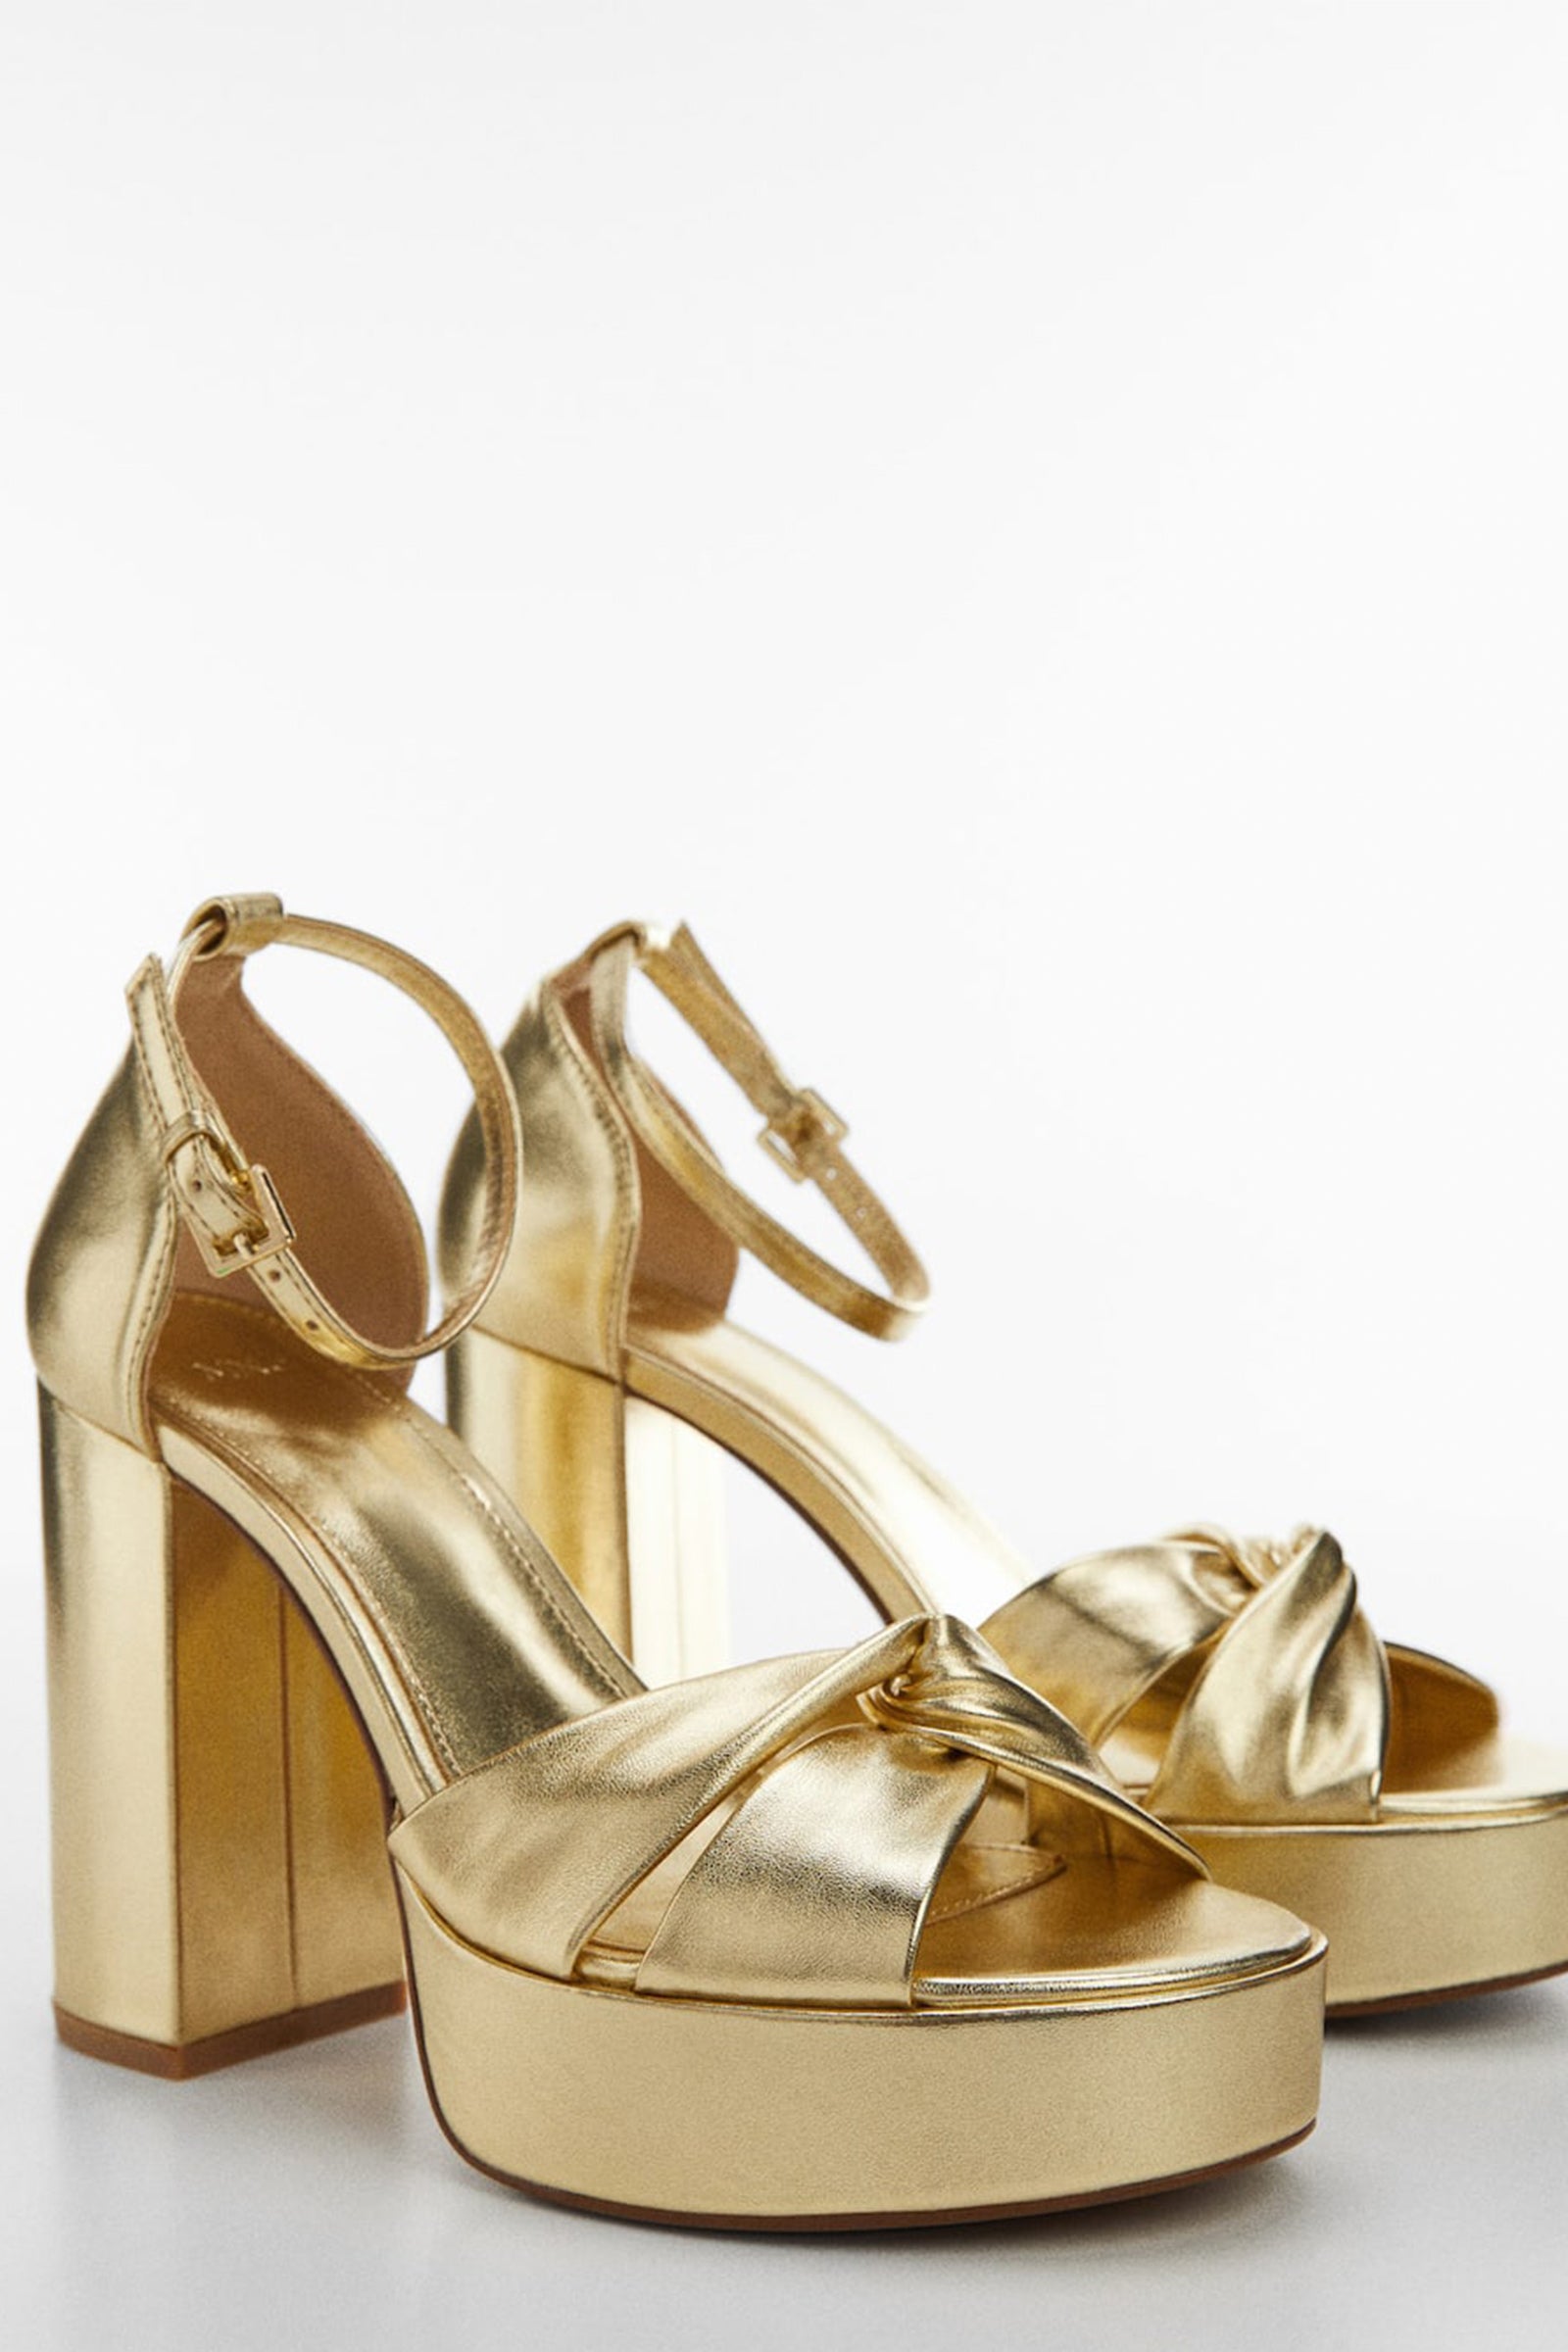 Gianvito Rossi: Gold Metallic Heeled Sandals | SSENSE Canada